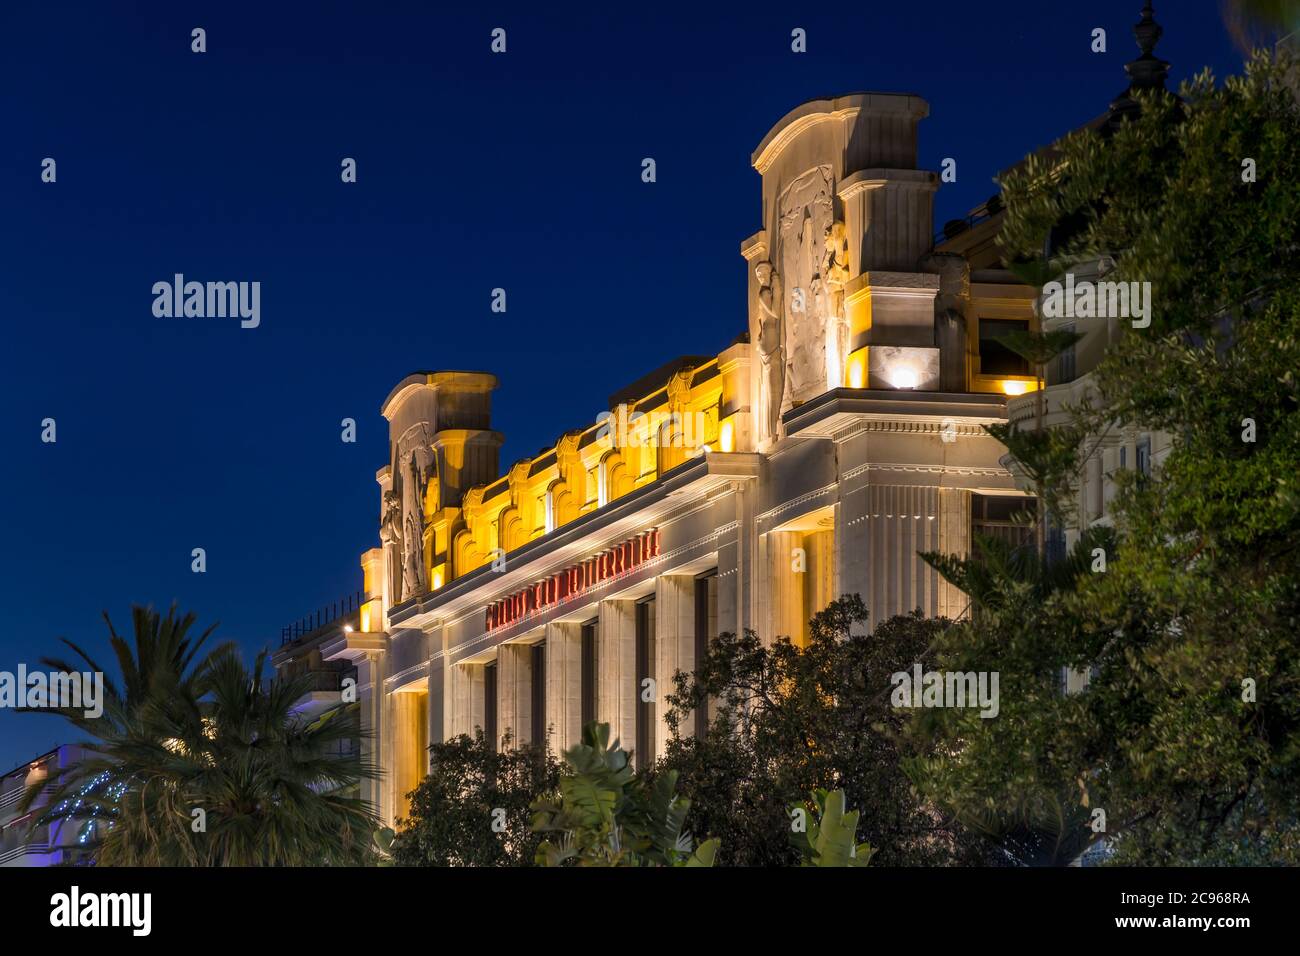 Illuminated Palais de la Mediterranee building at dusk, Nice, Cote d'Azur, France, Europe Stock Photo